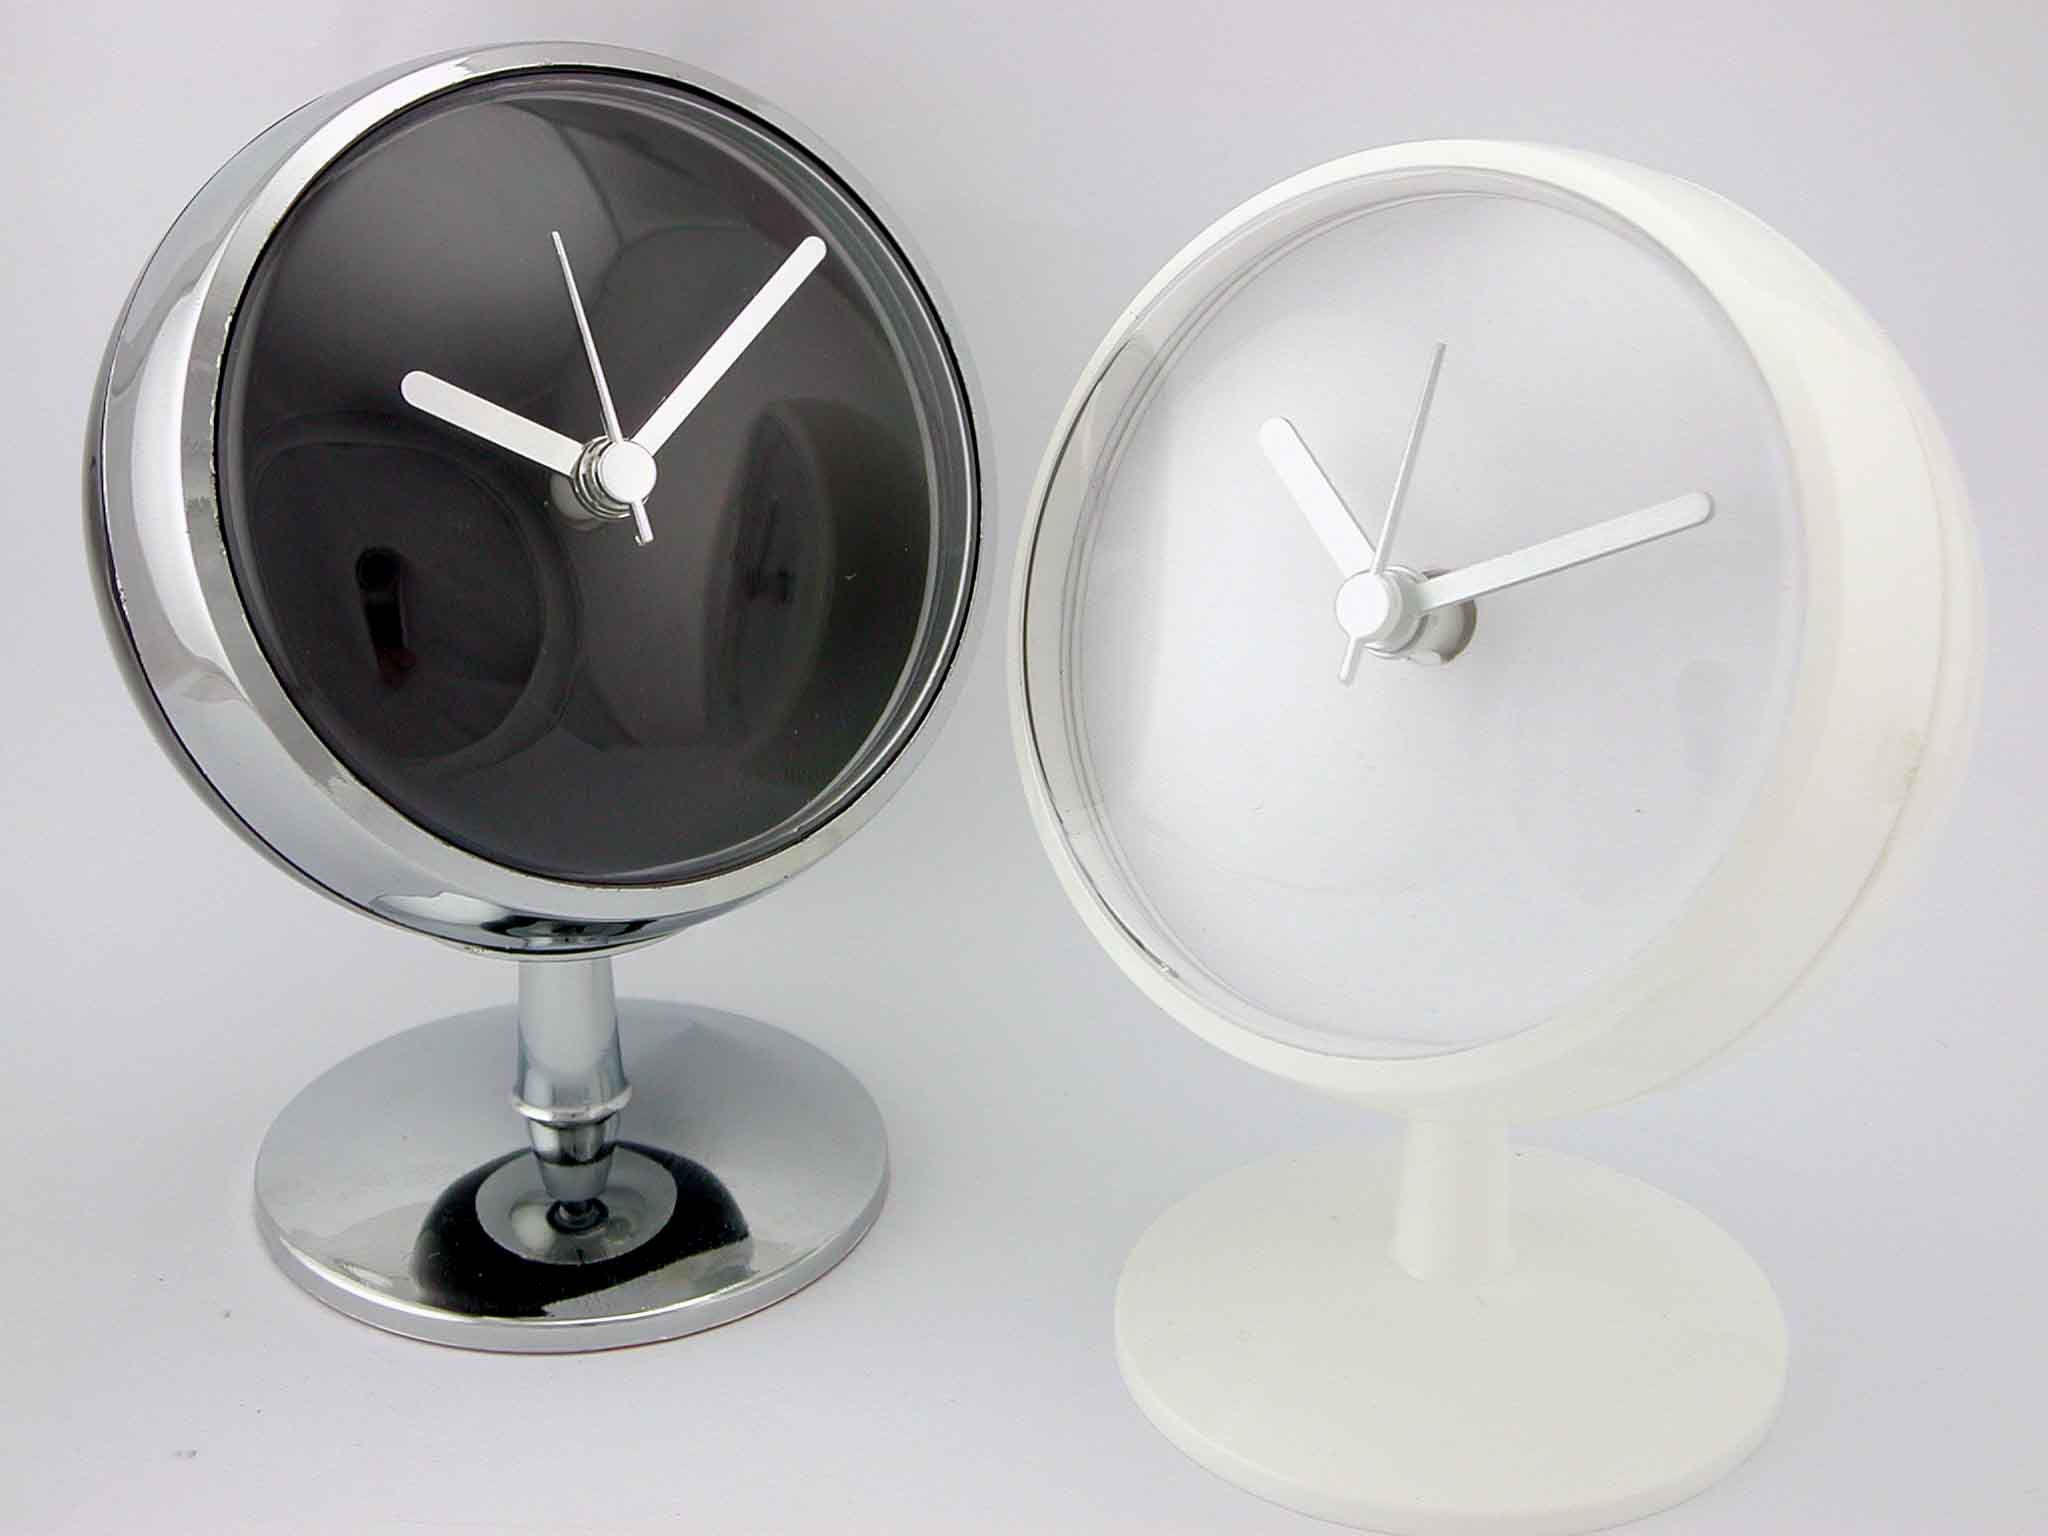 unserer Sache - Plastic Ball Shape Analog-Uhr mit Standfuß (unserer Sache - Plastic Ball Shape Analog-Uhr mit Standfuß)